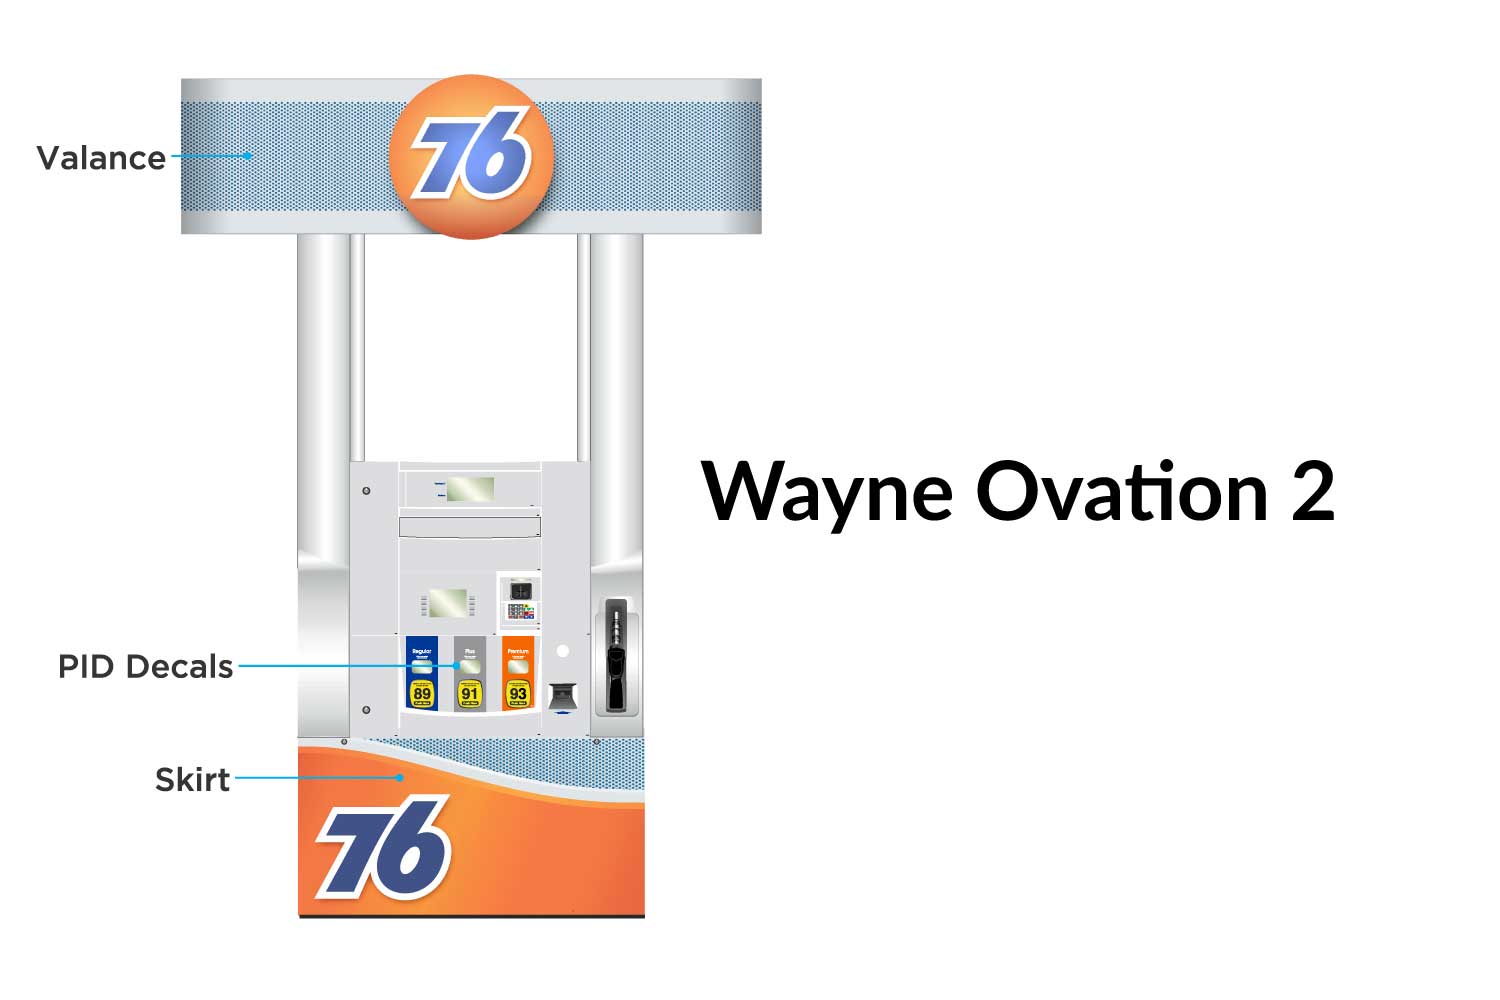 76 Gilbarco Wayne Ovation 2 Dispenser Model